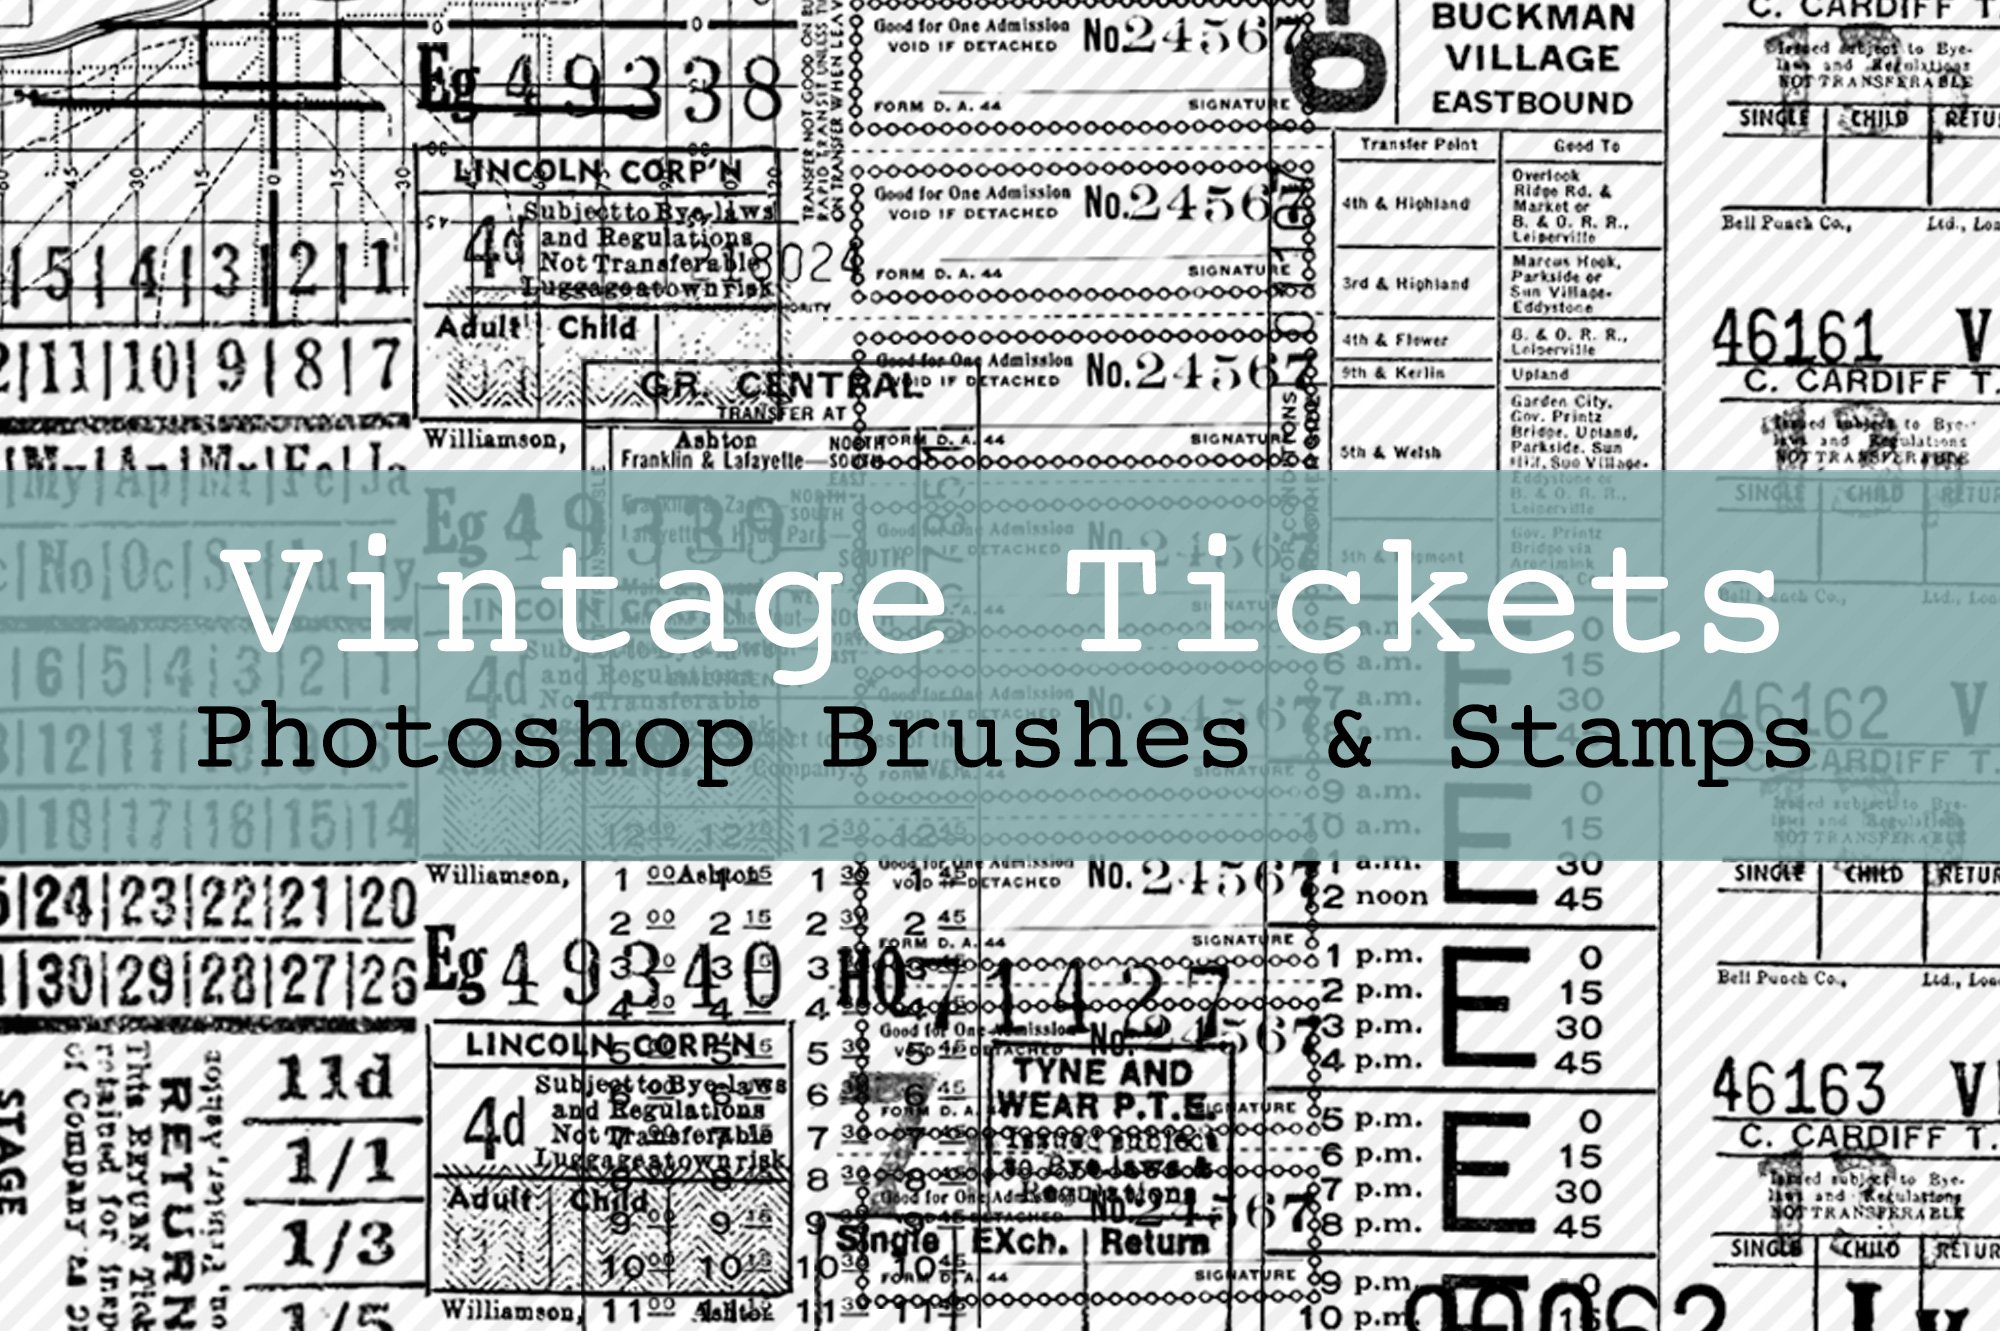 Vintage Tickets Brushes & Stampscover image.